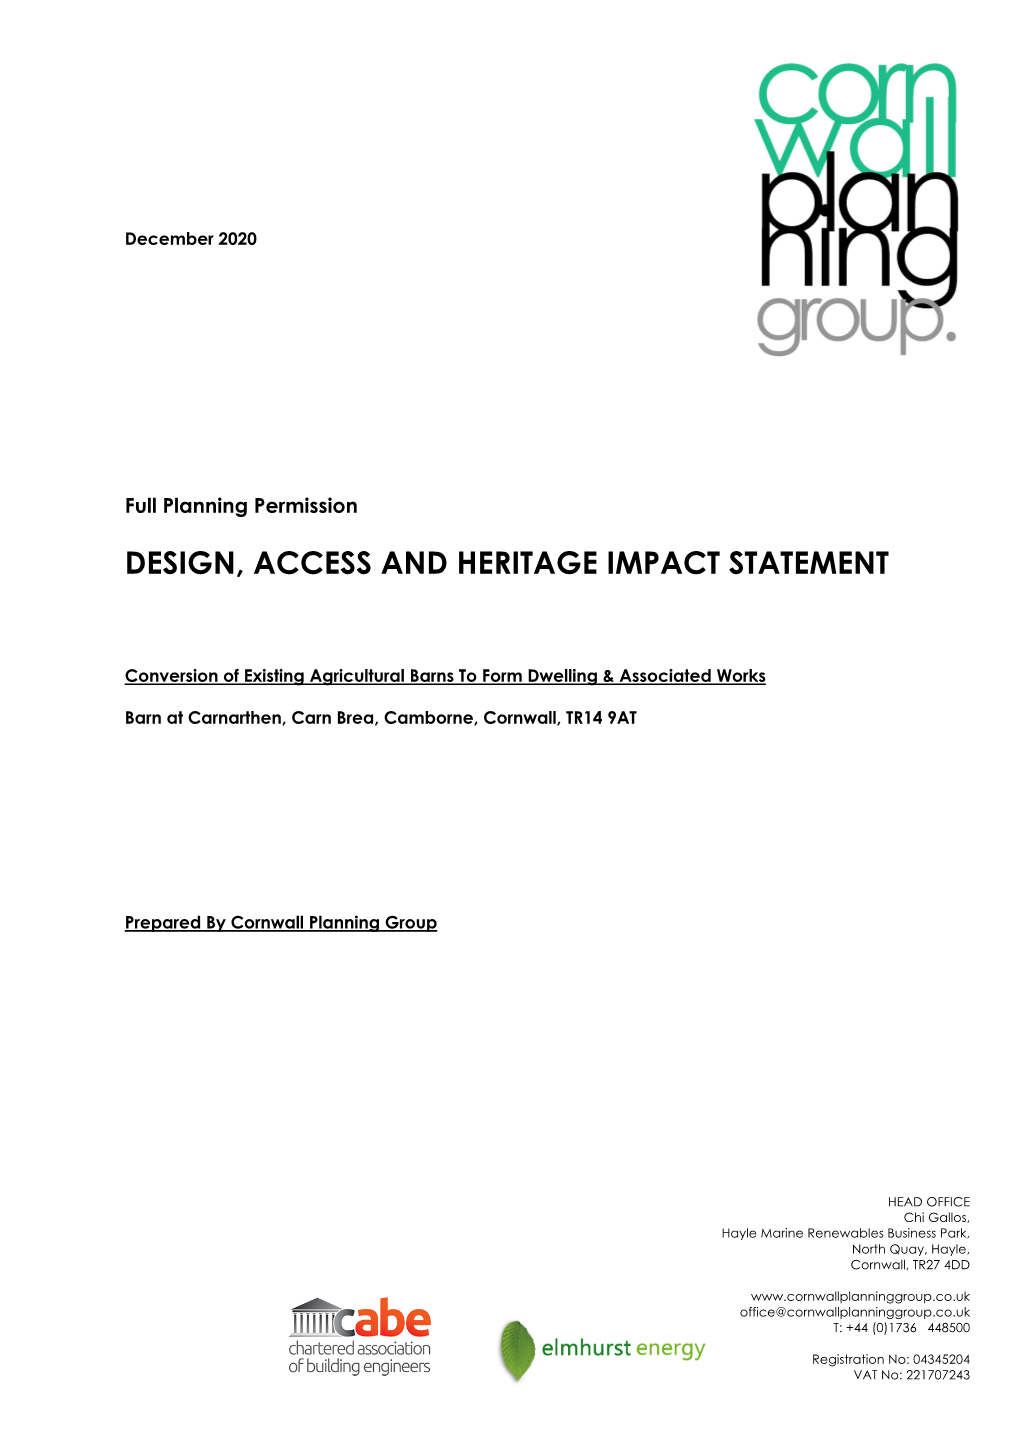 Design Access & Heritage Statement